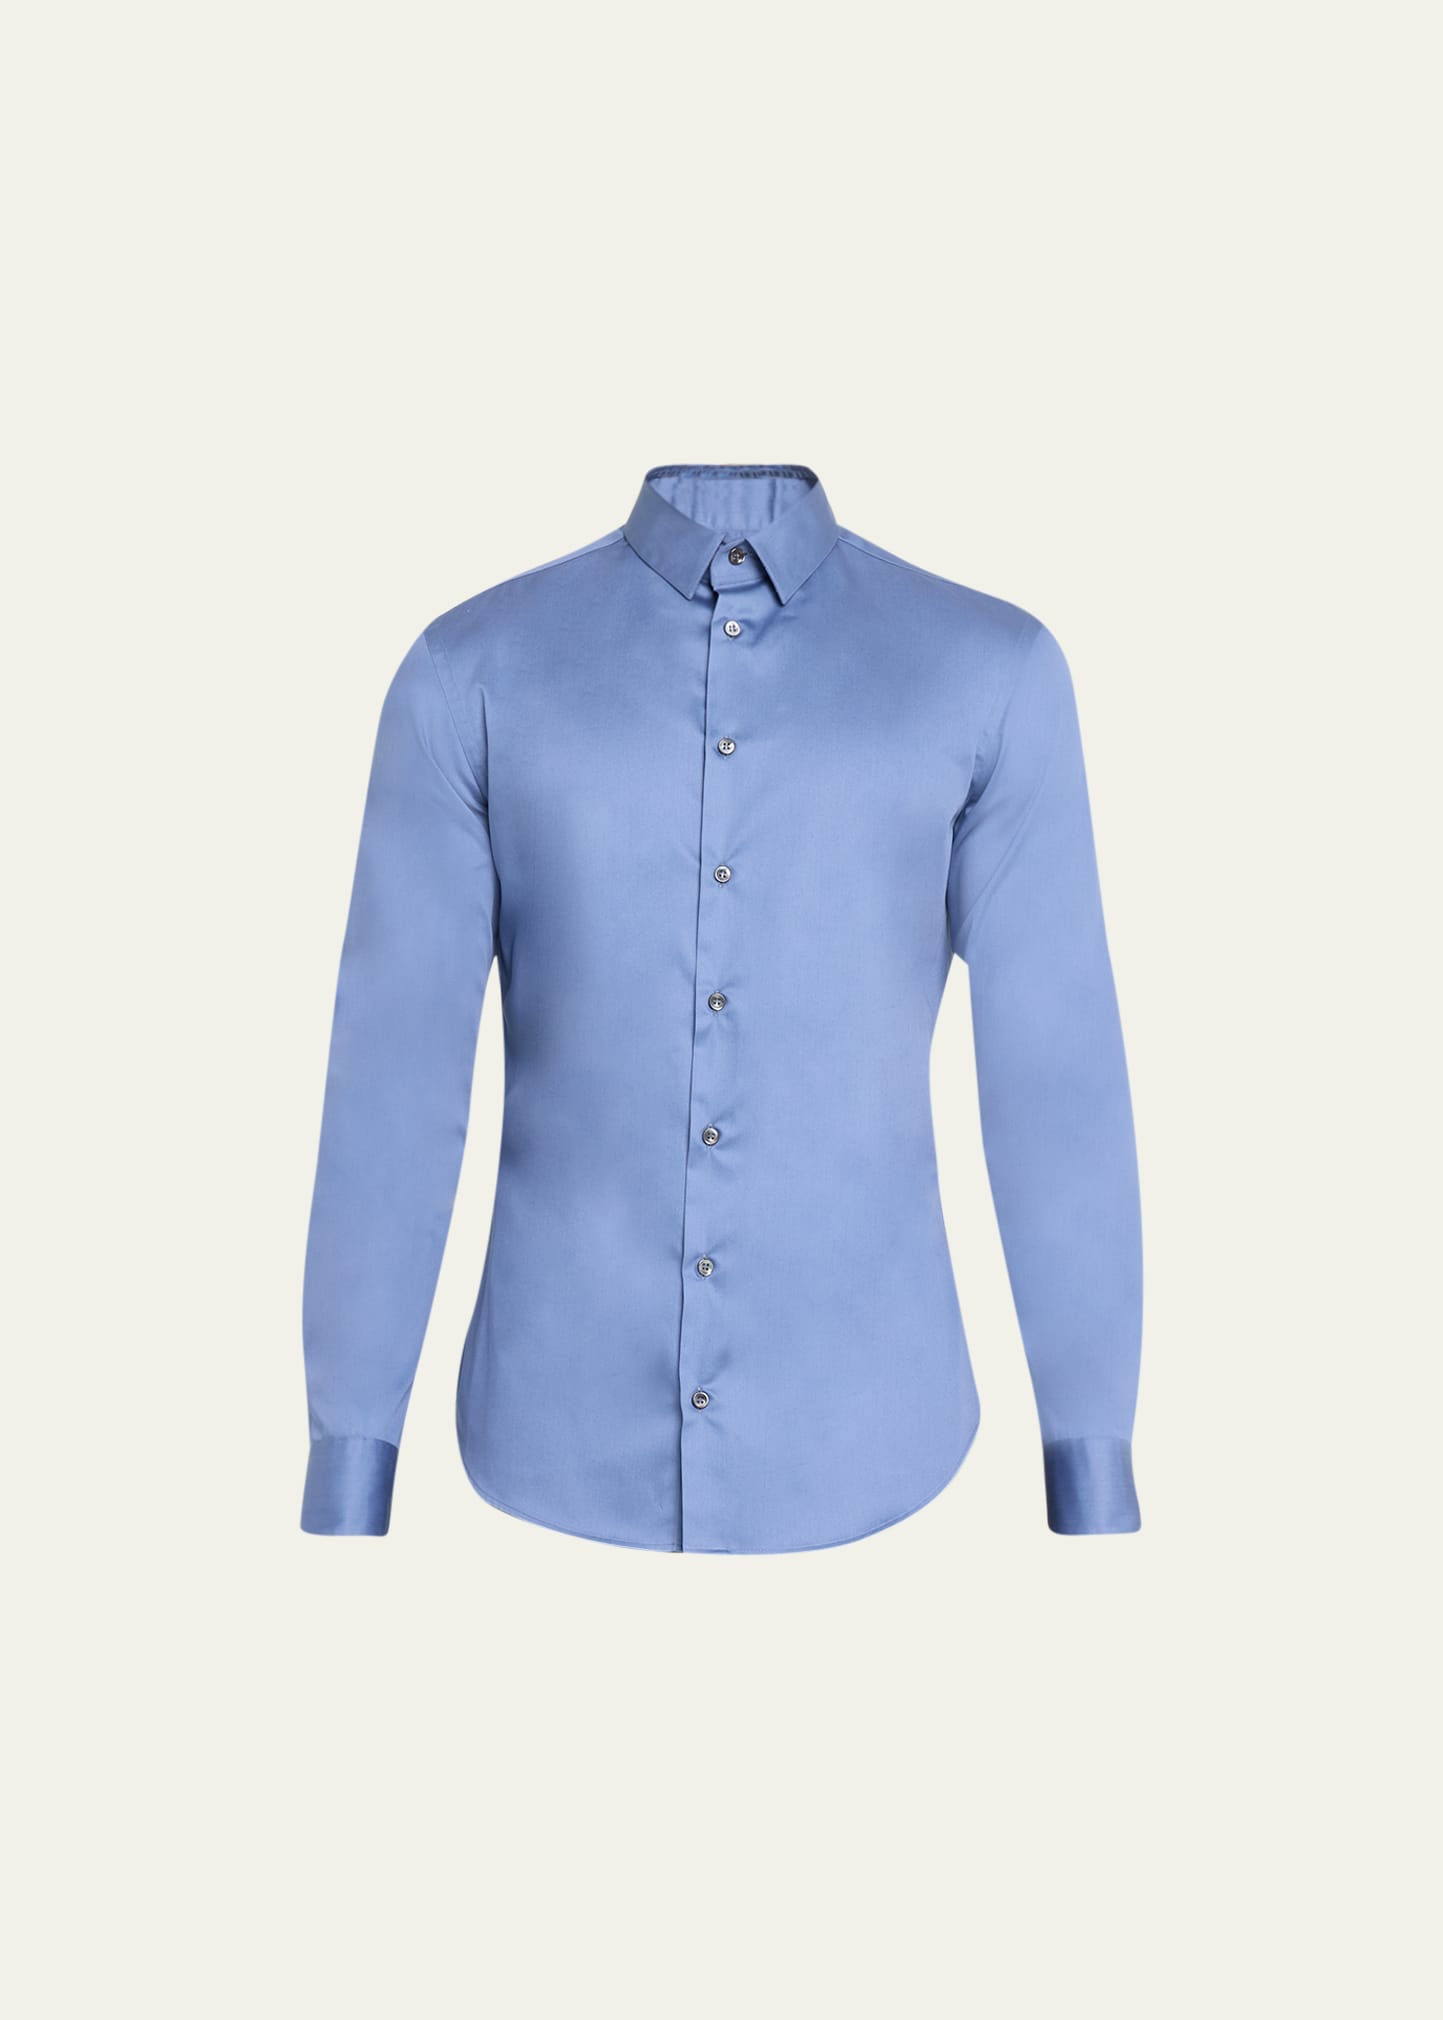 Giorgio Armani Men's Solid Cotton Sport Shirt In Solid Medium Blue